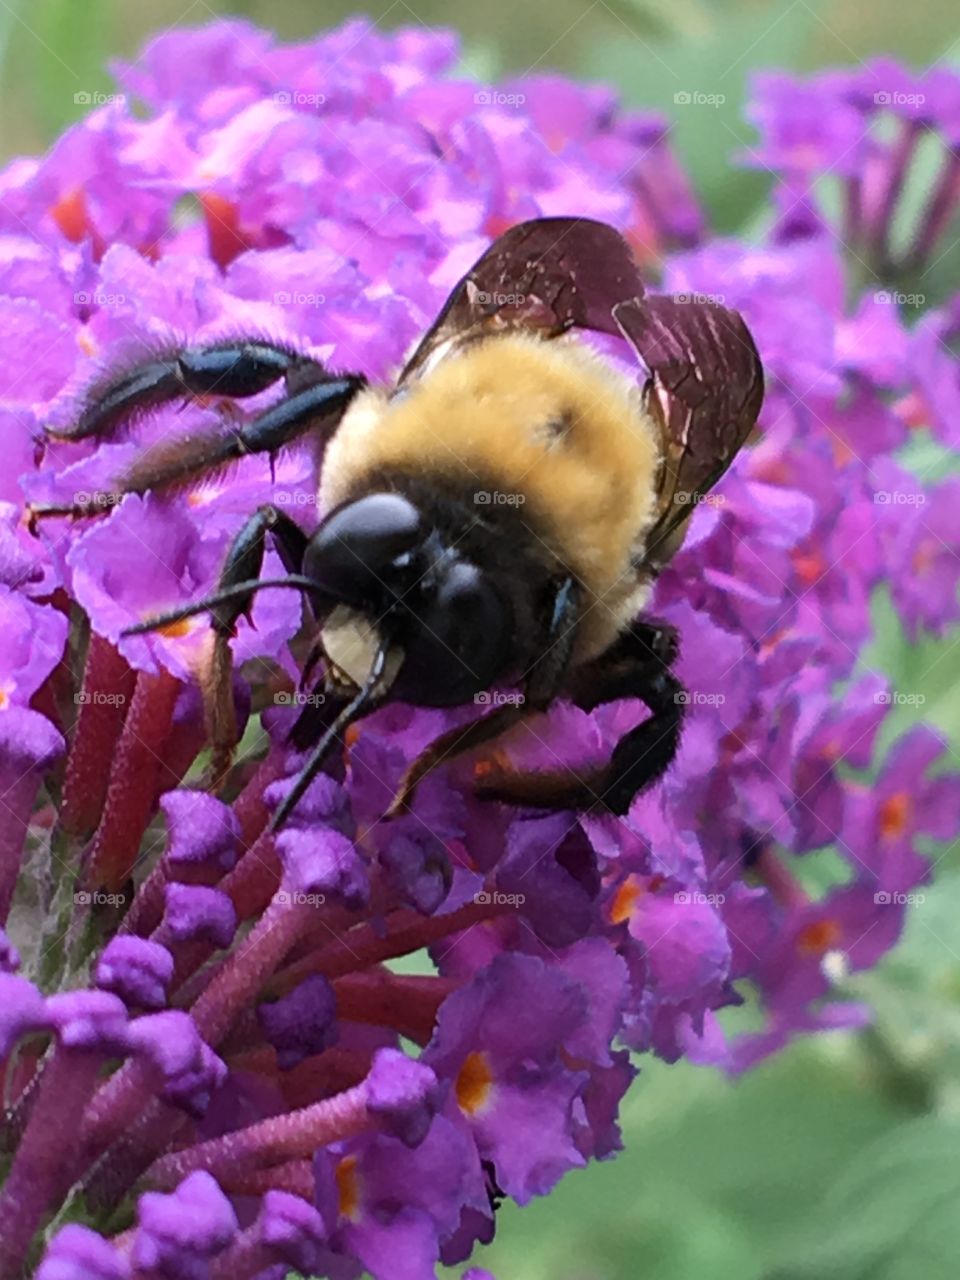 Bumblebee pollinating on purple flower